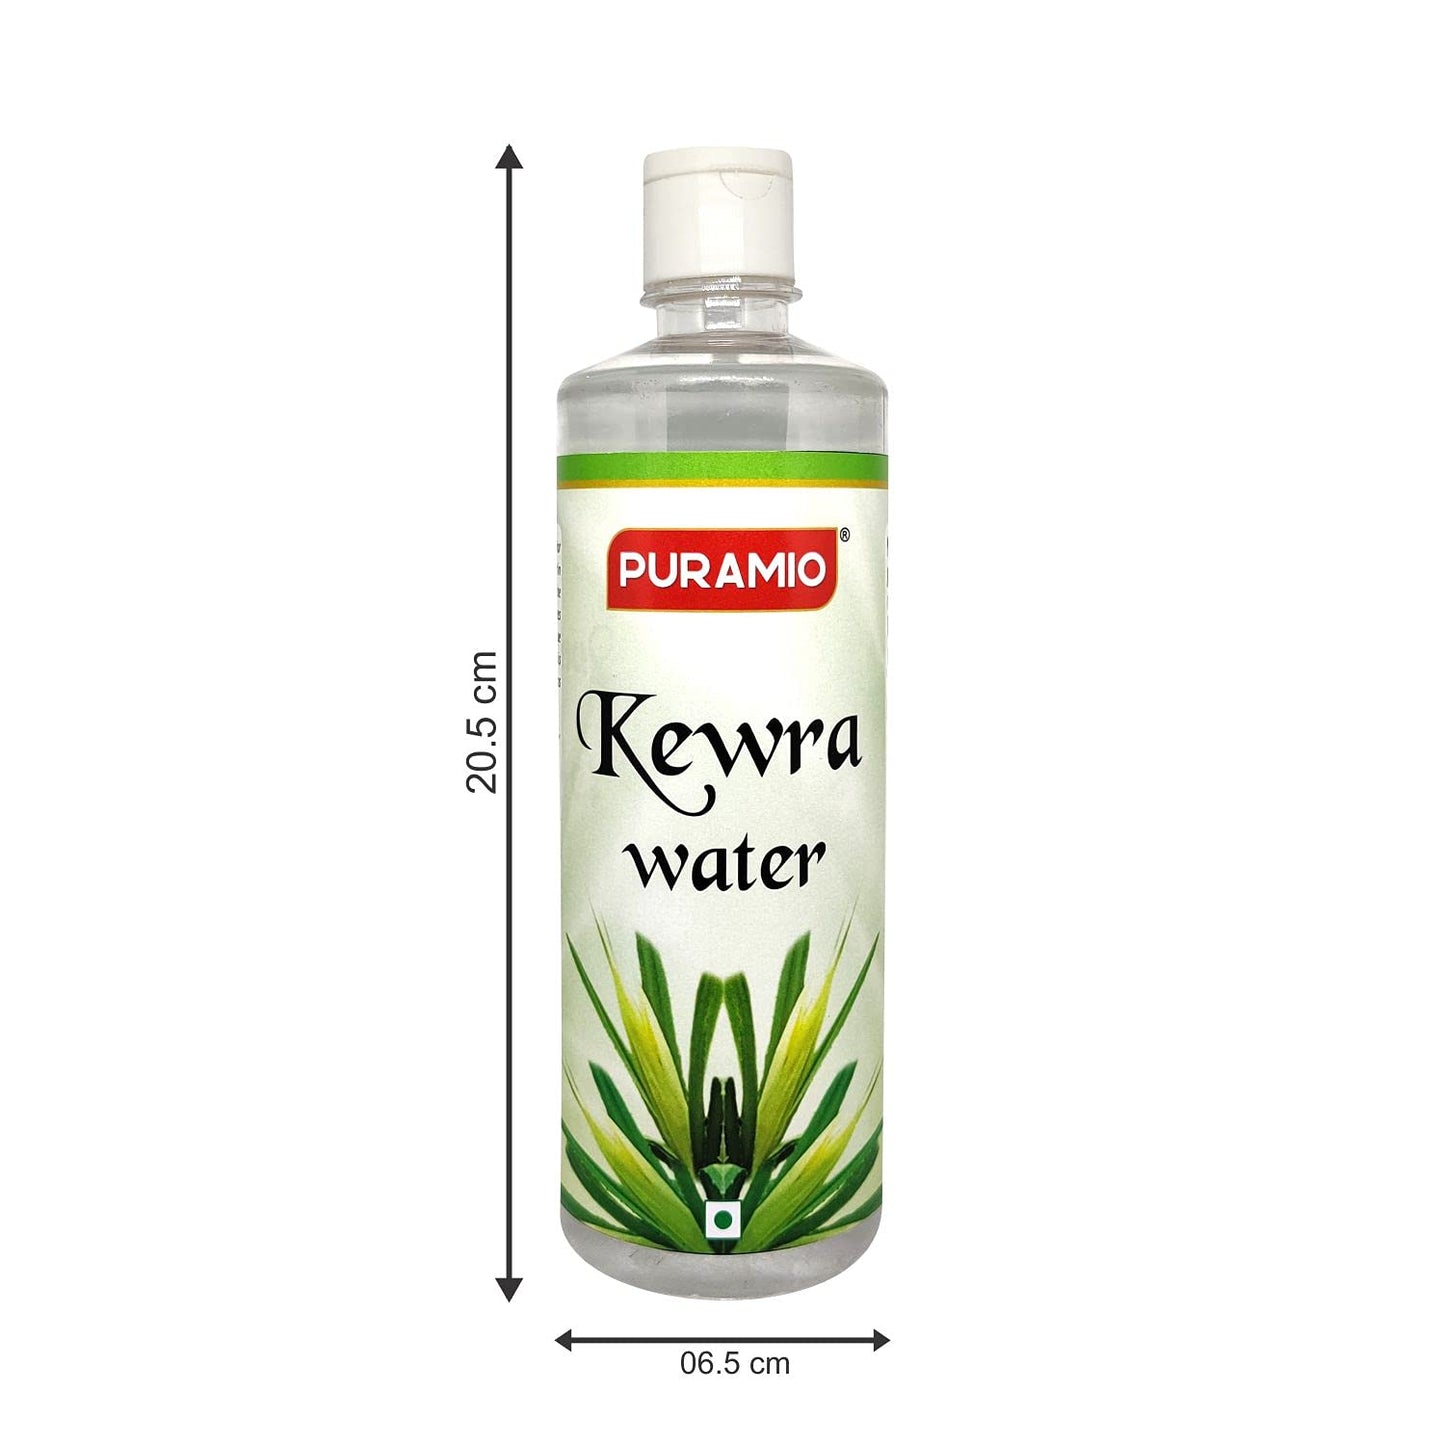 Puramio Rose & Kewra Water (for Biryani, Mughlai Dishes & Cosmetic use), 500ml Each